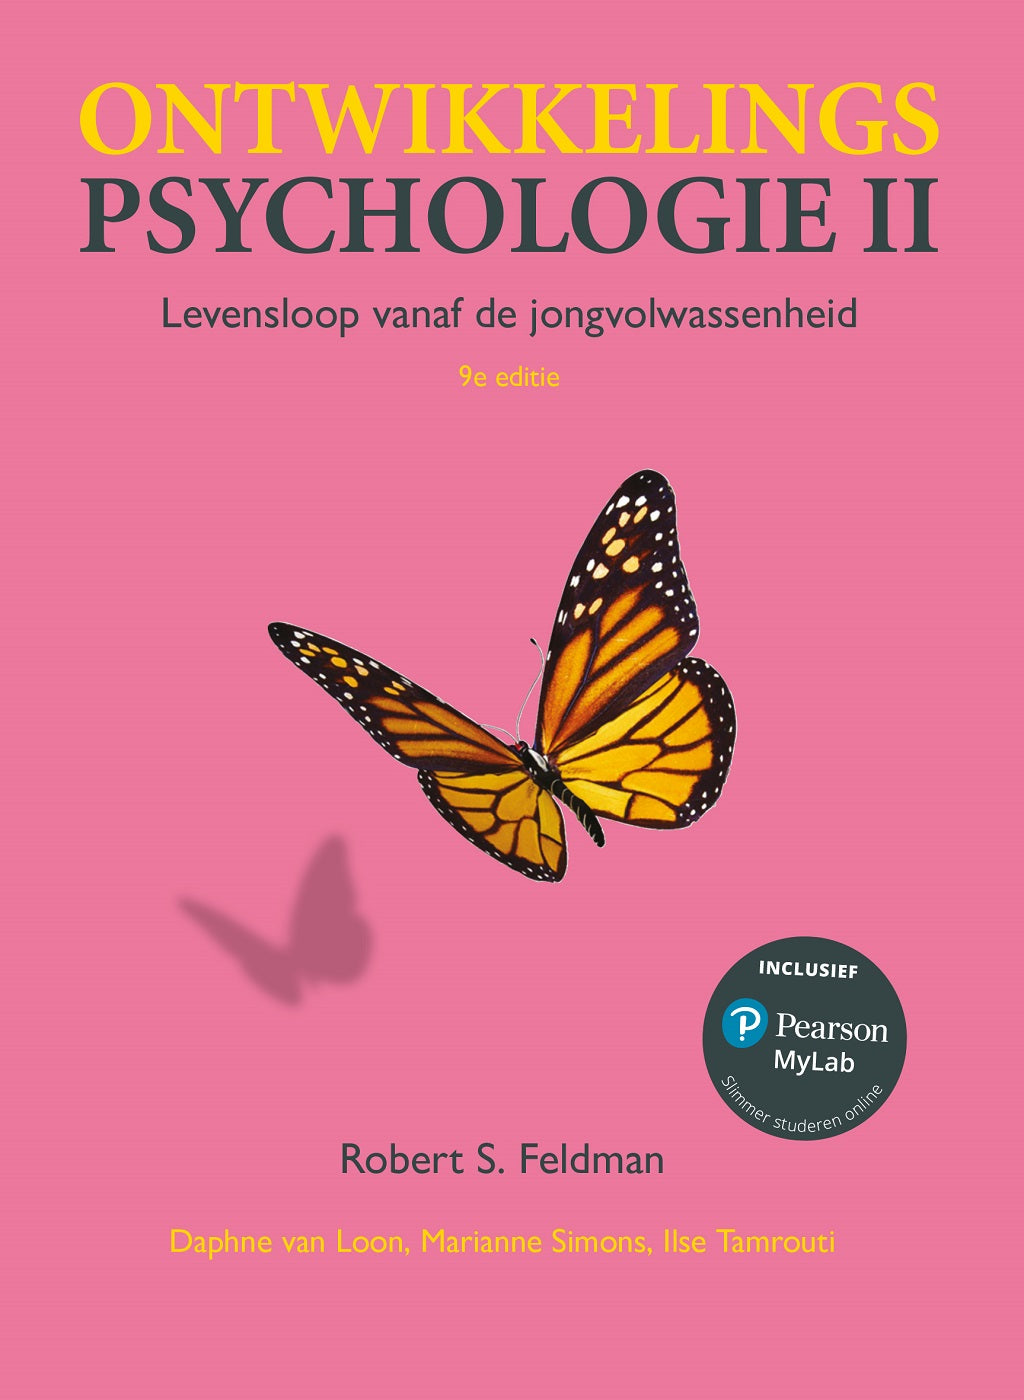 Ontwikkelingspsychologie II, 9e editie (Print boek + MyLab toegangscode)